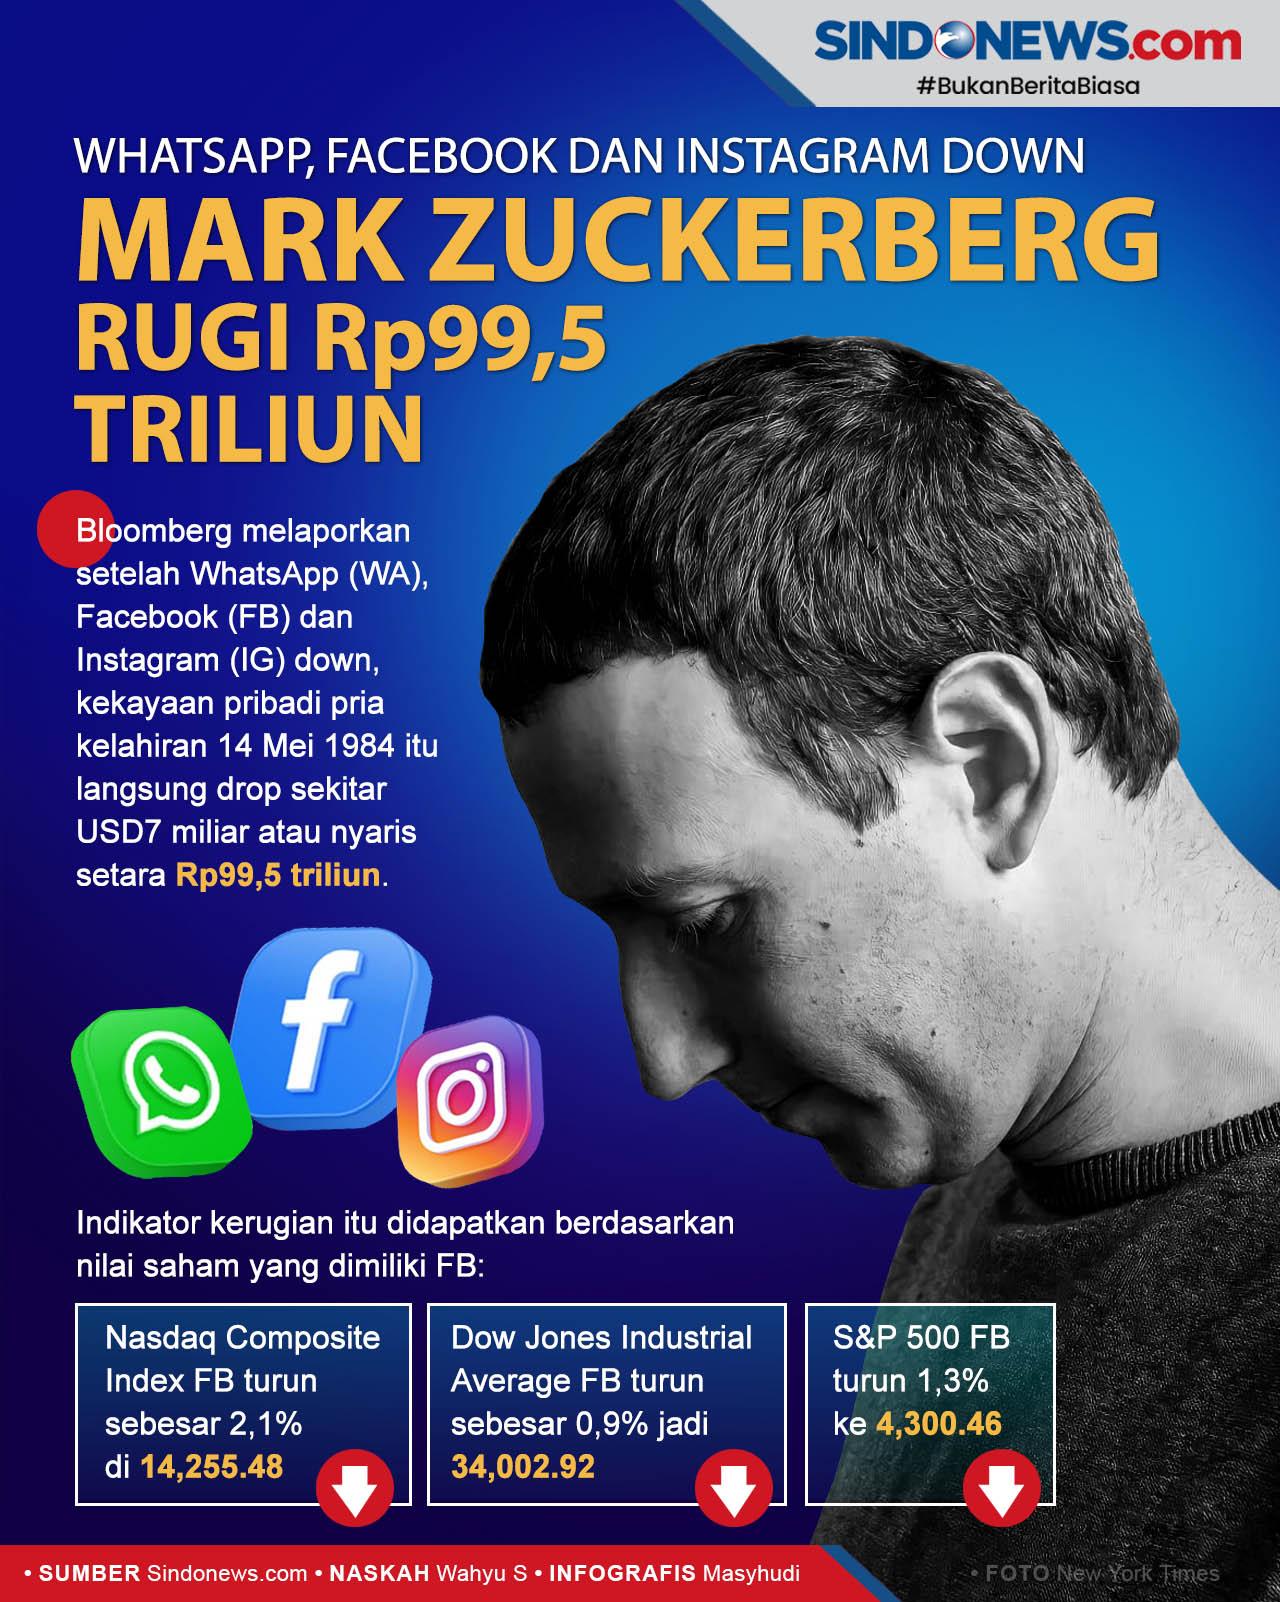 Mark zuckerberg rugi rp99